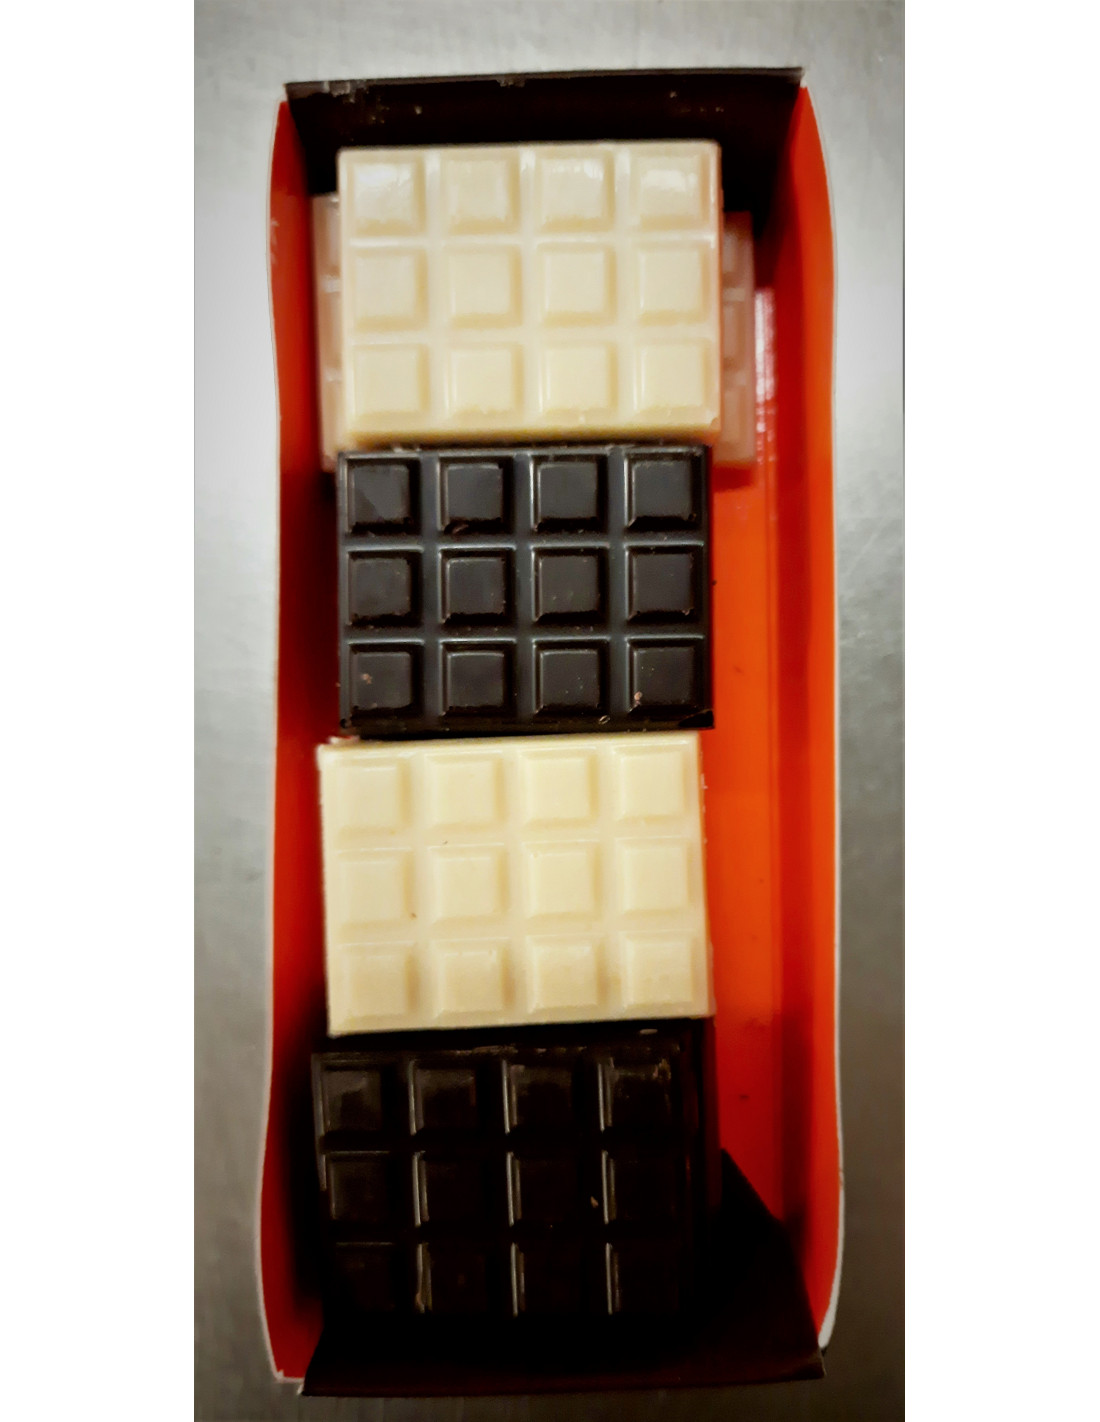 Mini tablettes en chocolat faciles